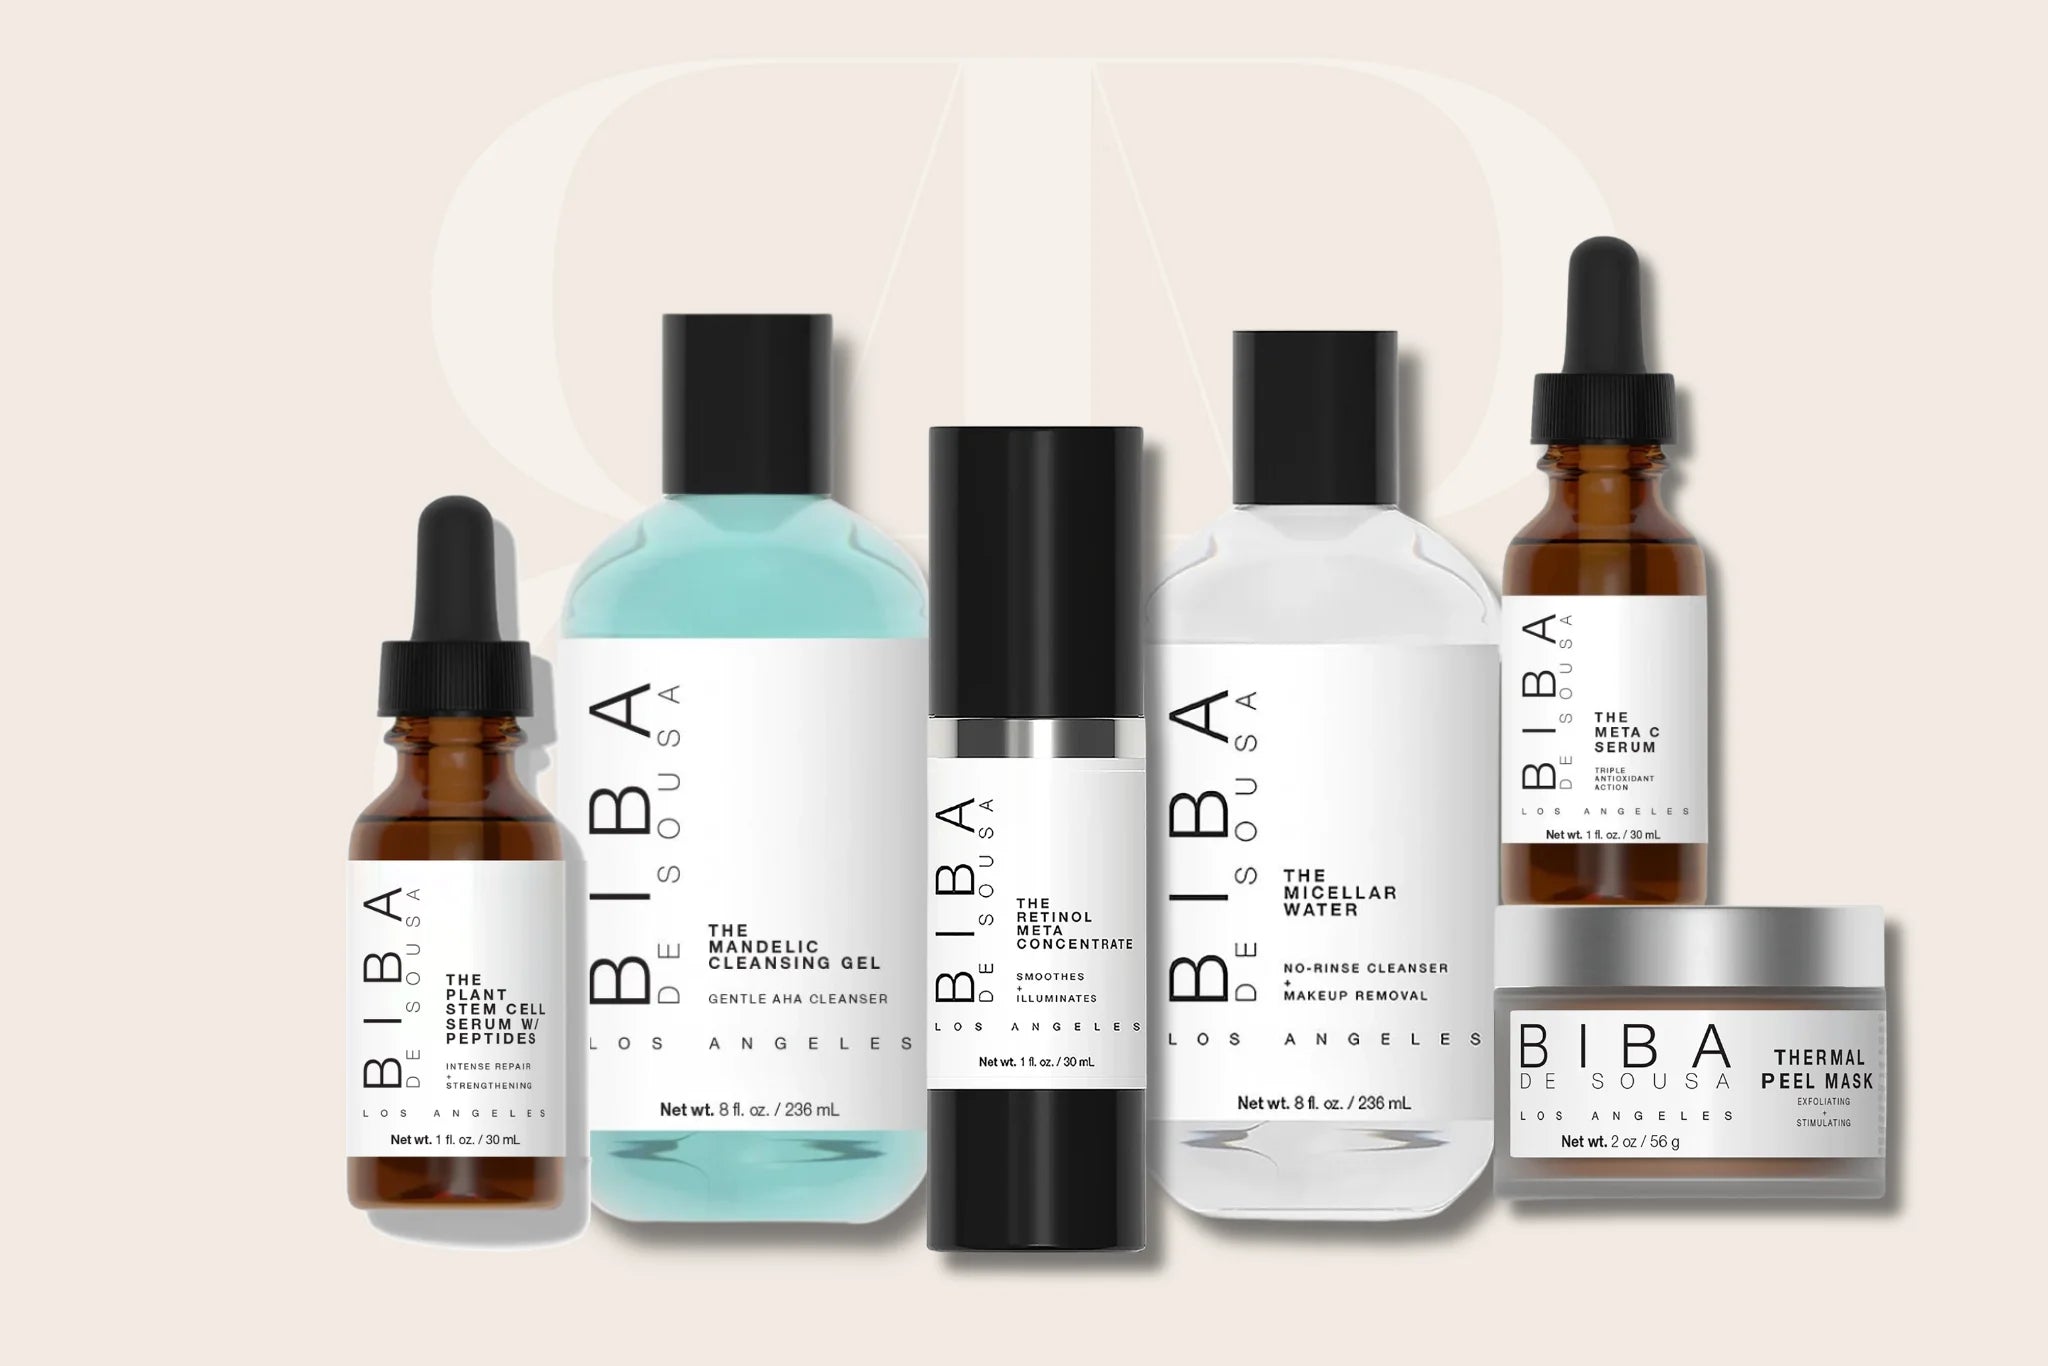 BIba de Sousa's Hyperpigmentation Products